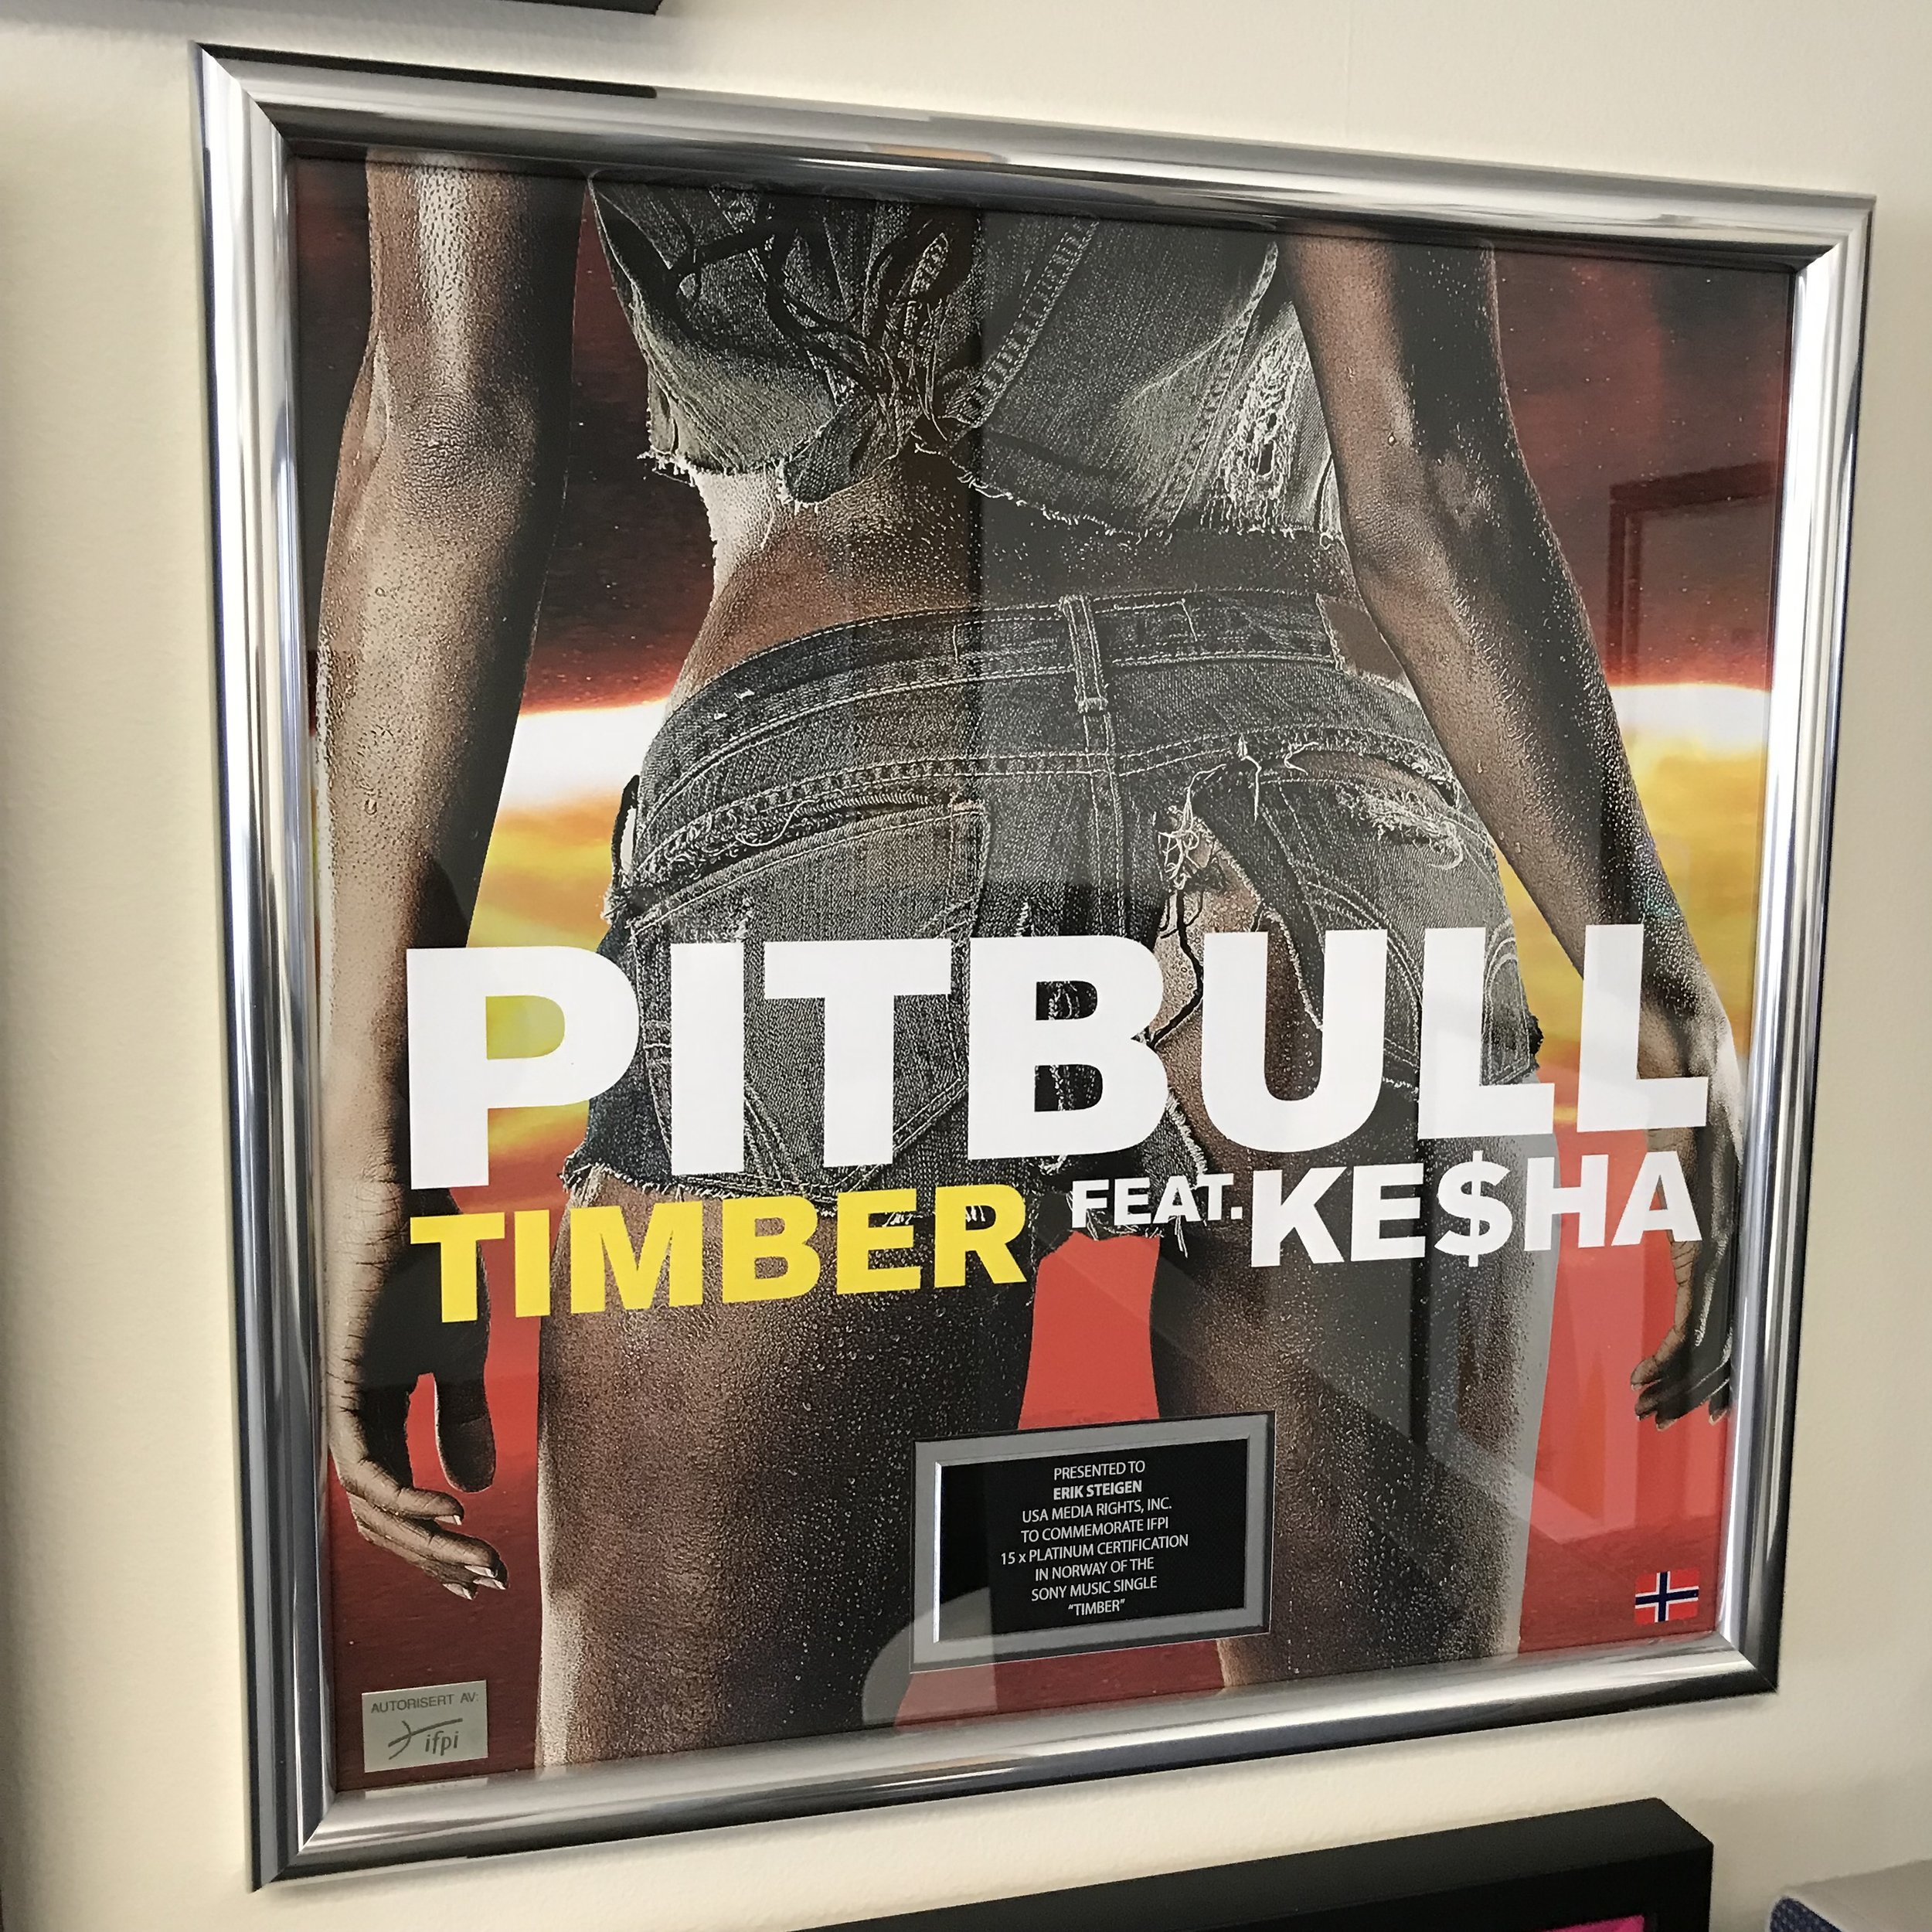 Pitbull Ke$ha Timber Norway plaque.jpg